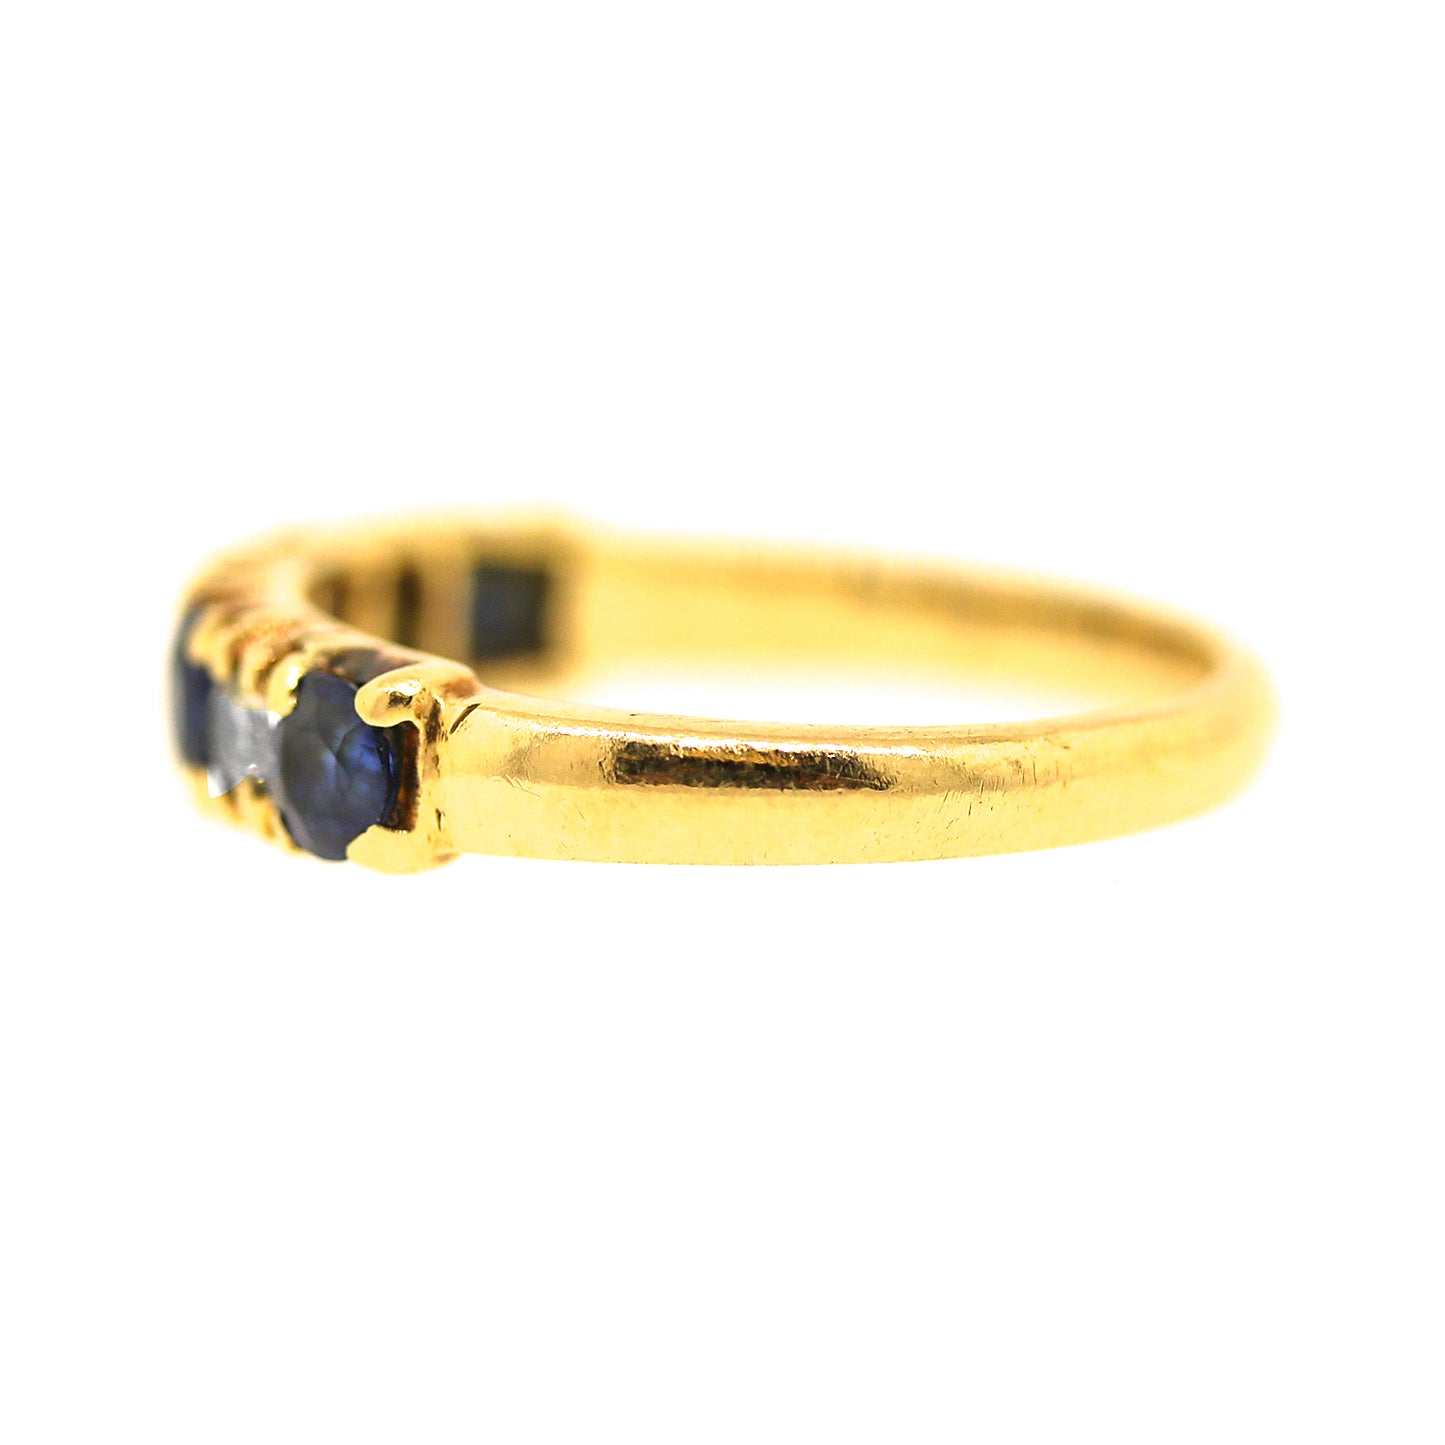 Sapphire & Diamond Ring in 14k Gold